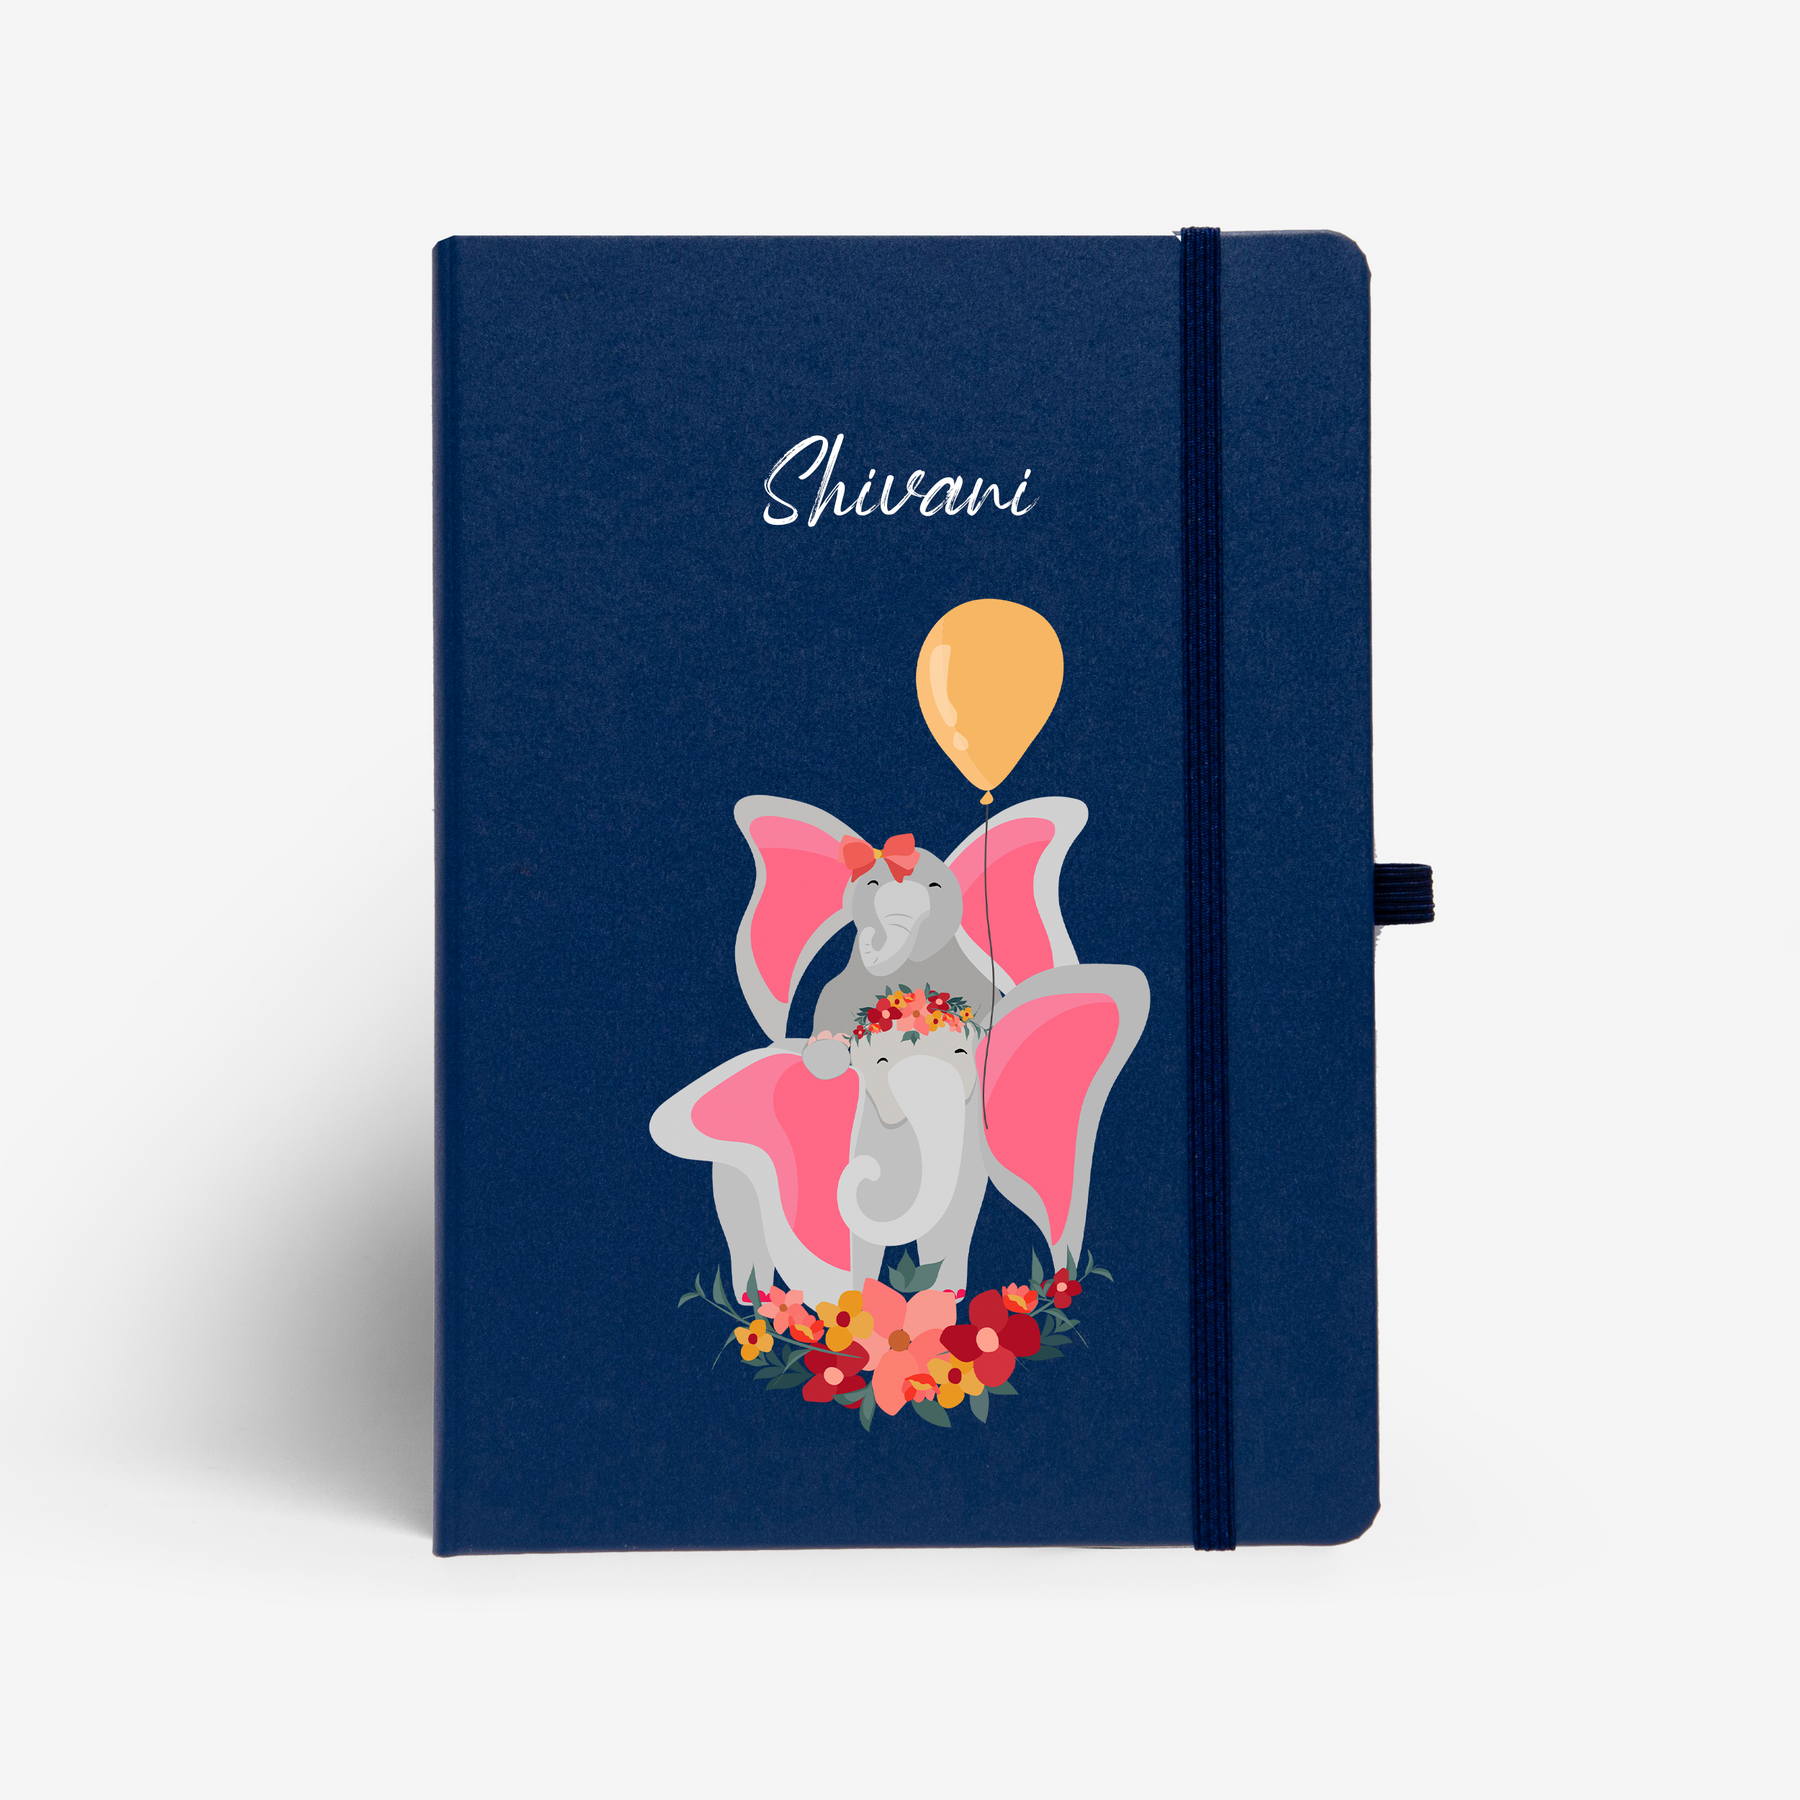 Personalised Hardbound Notebook - Trunkload of love